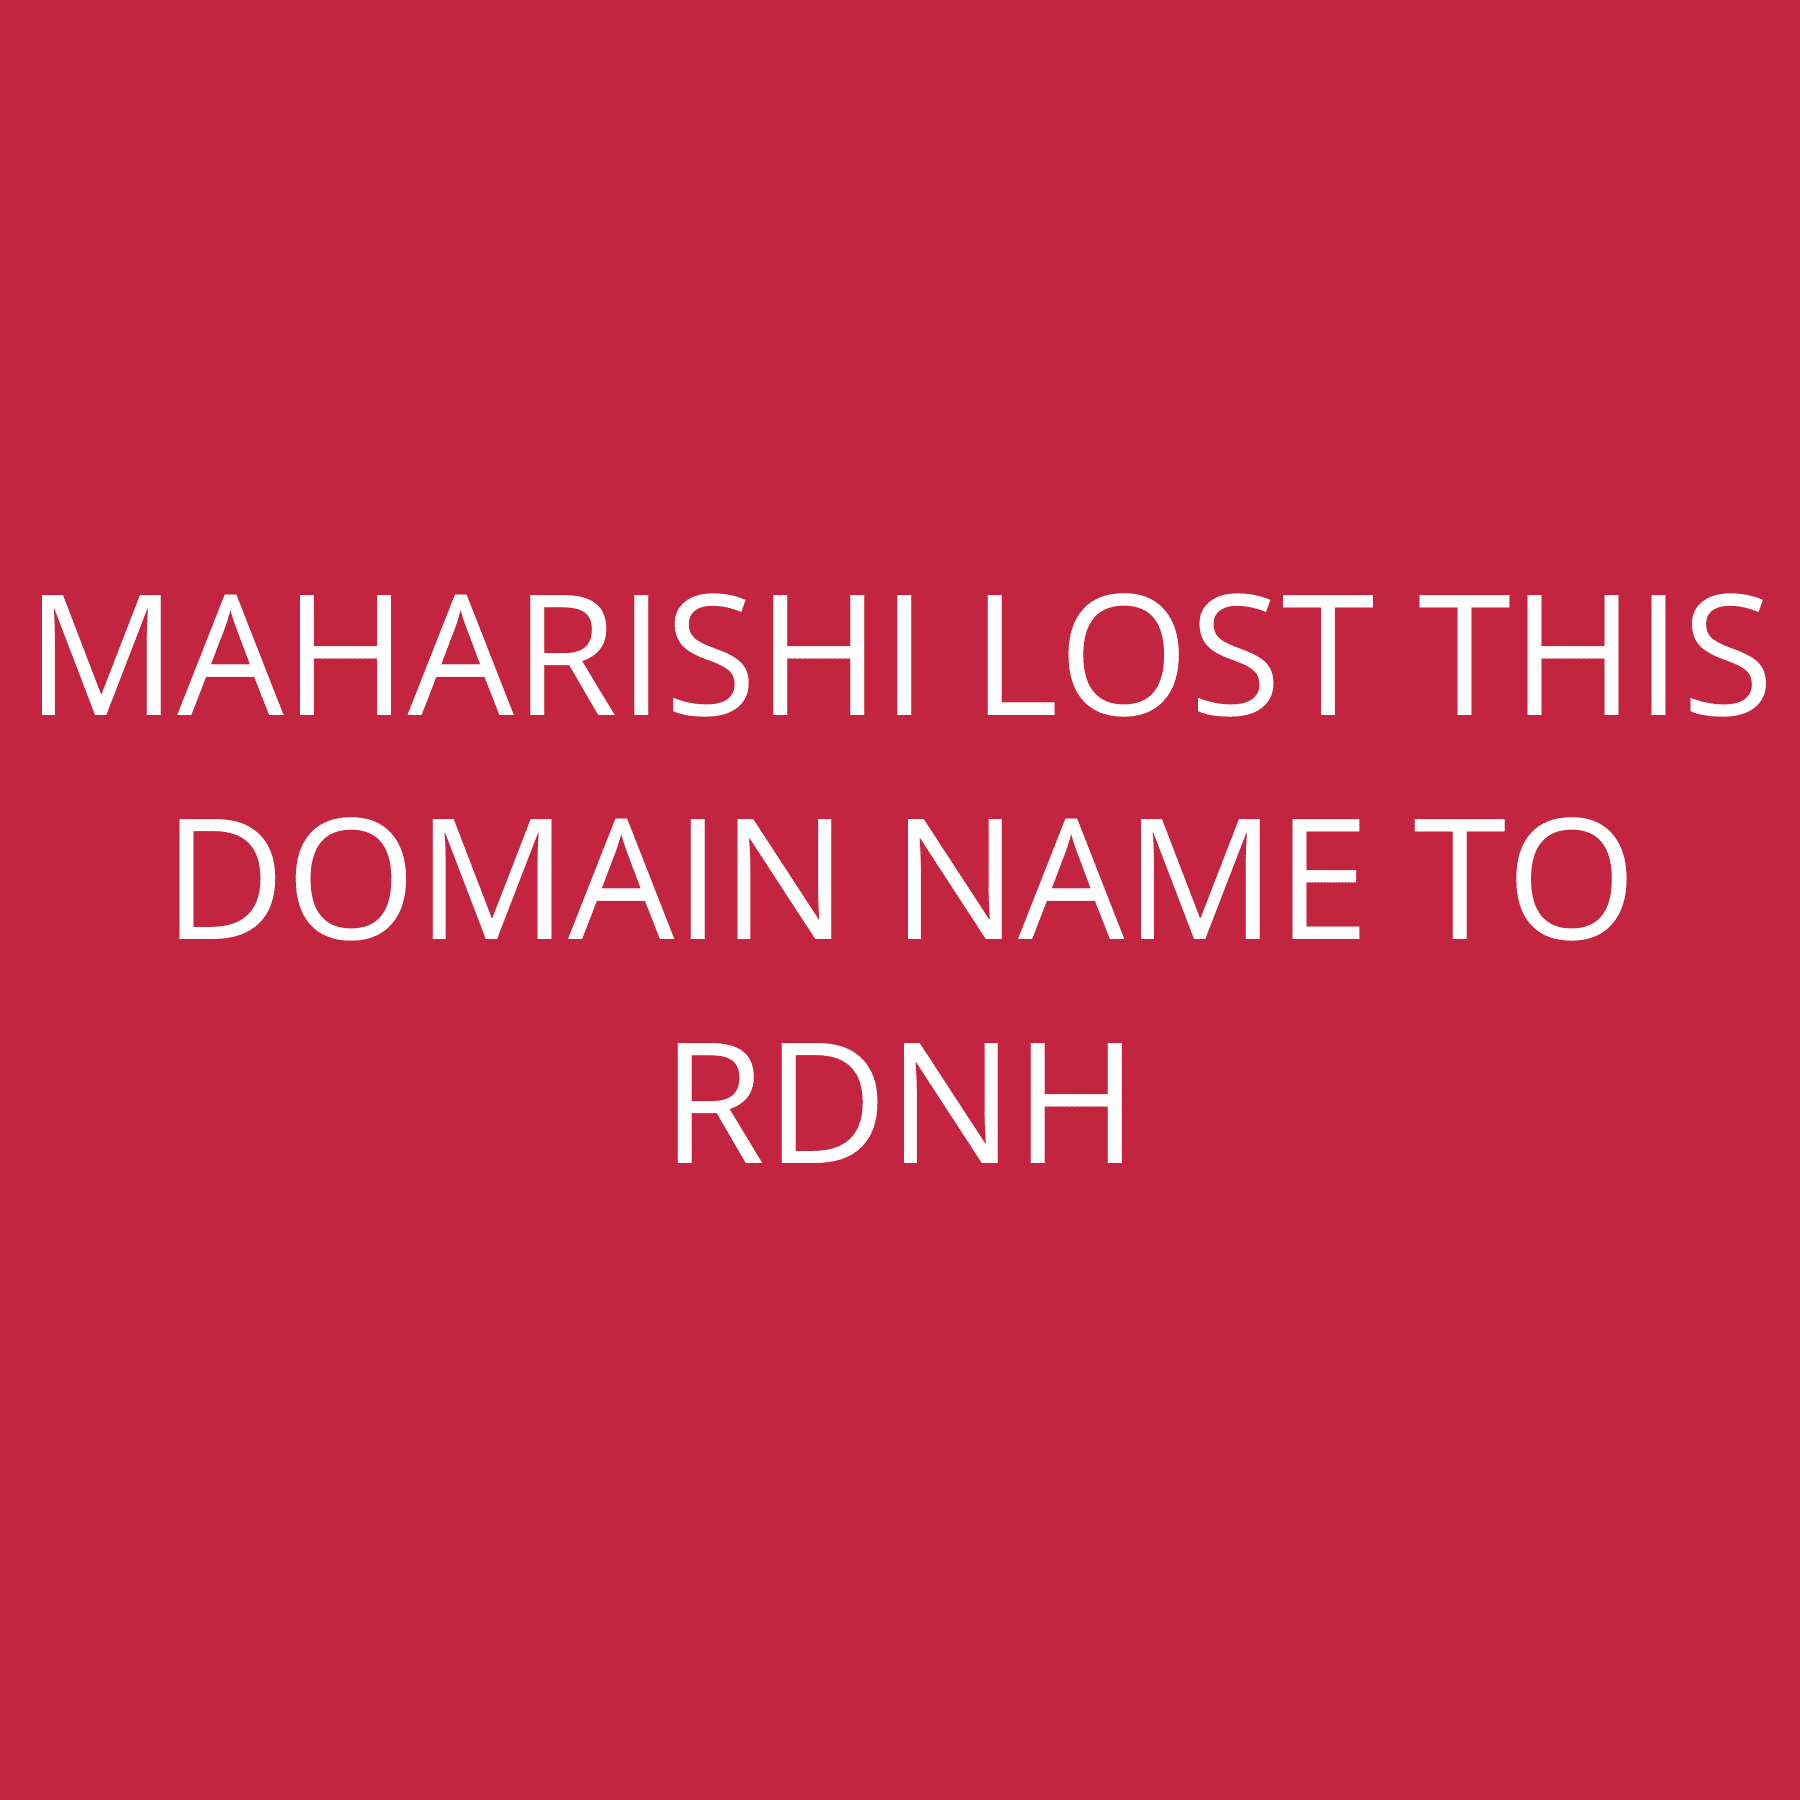 Maharishi lost this domain name to RDNH